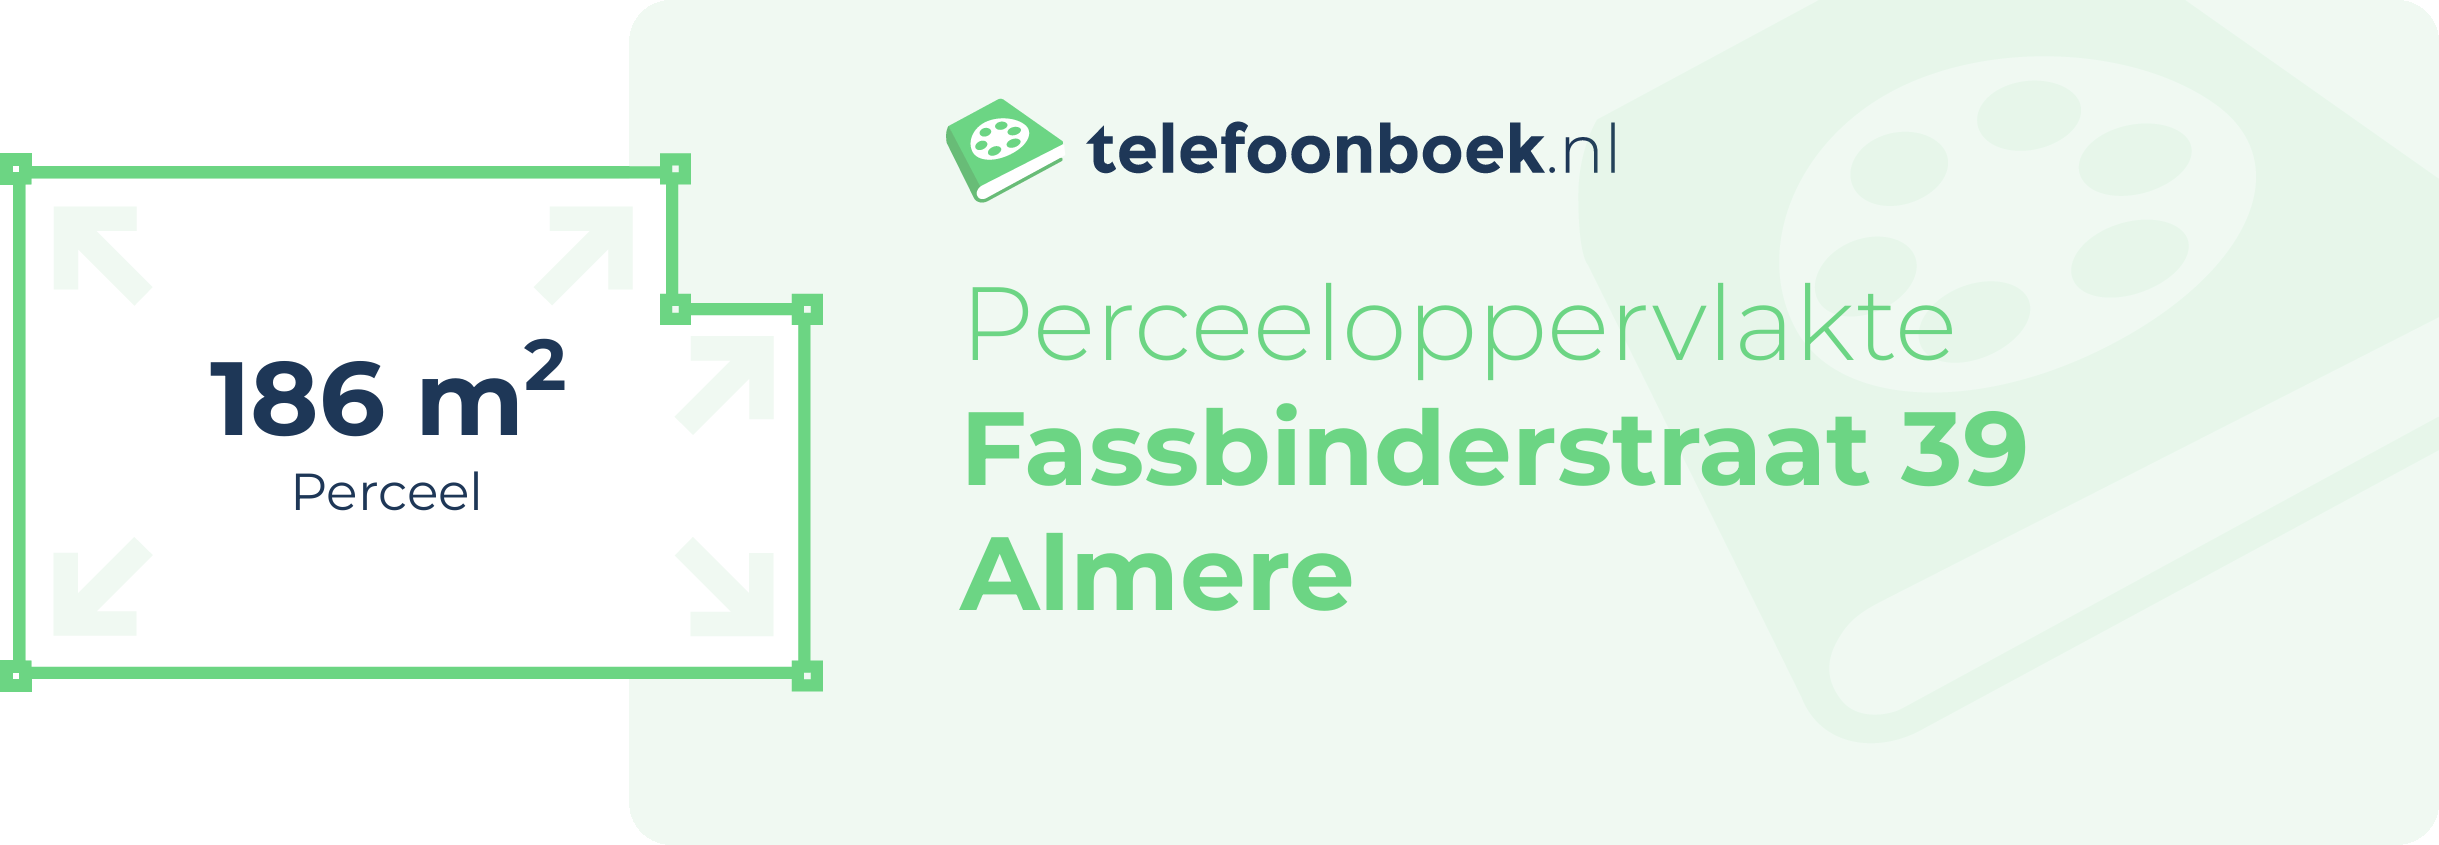 Perceeloppervlakte Fassbinderstraat 39 Almere